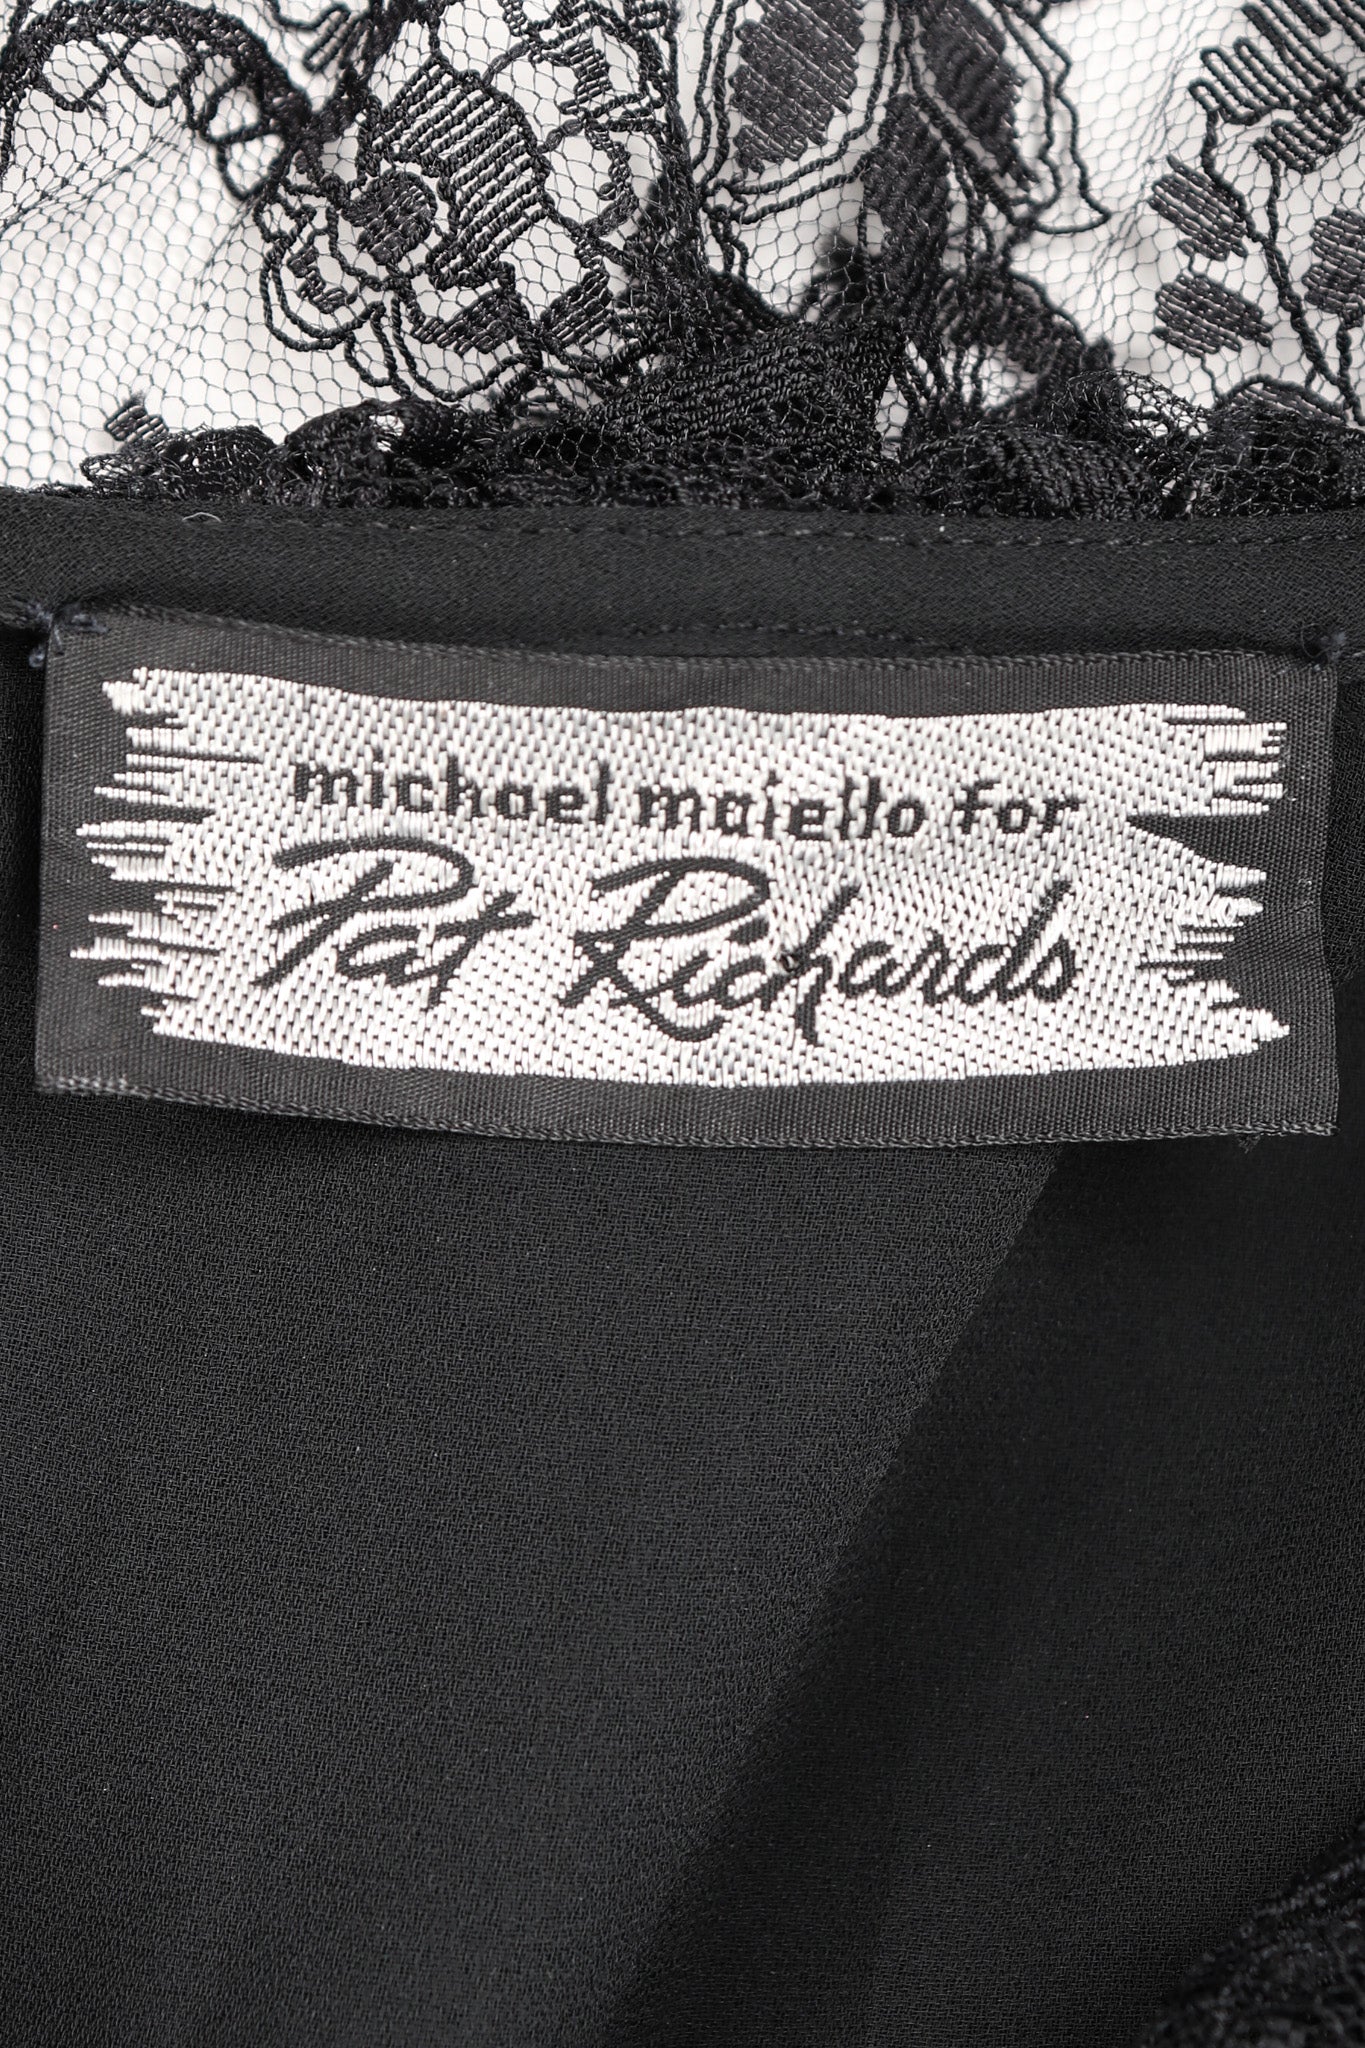 Recess Los Angeles Vintage Michael Maiello Pat Richards Pleated Chiffon Negligée Jumpsuit